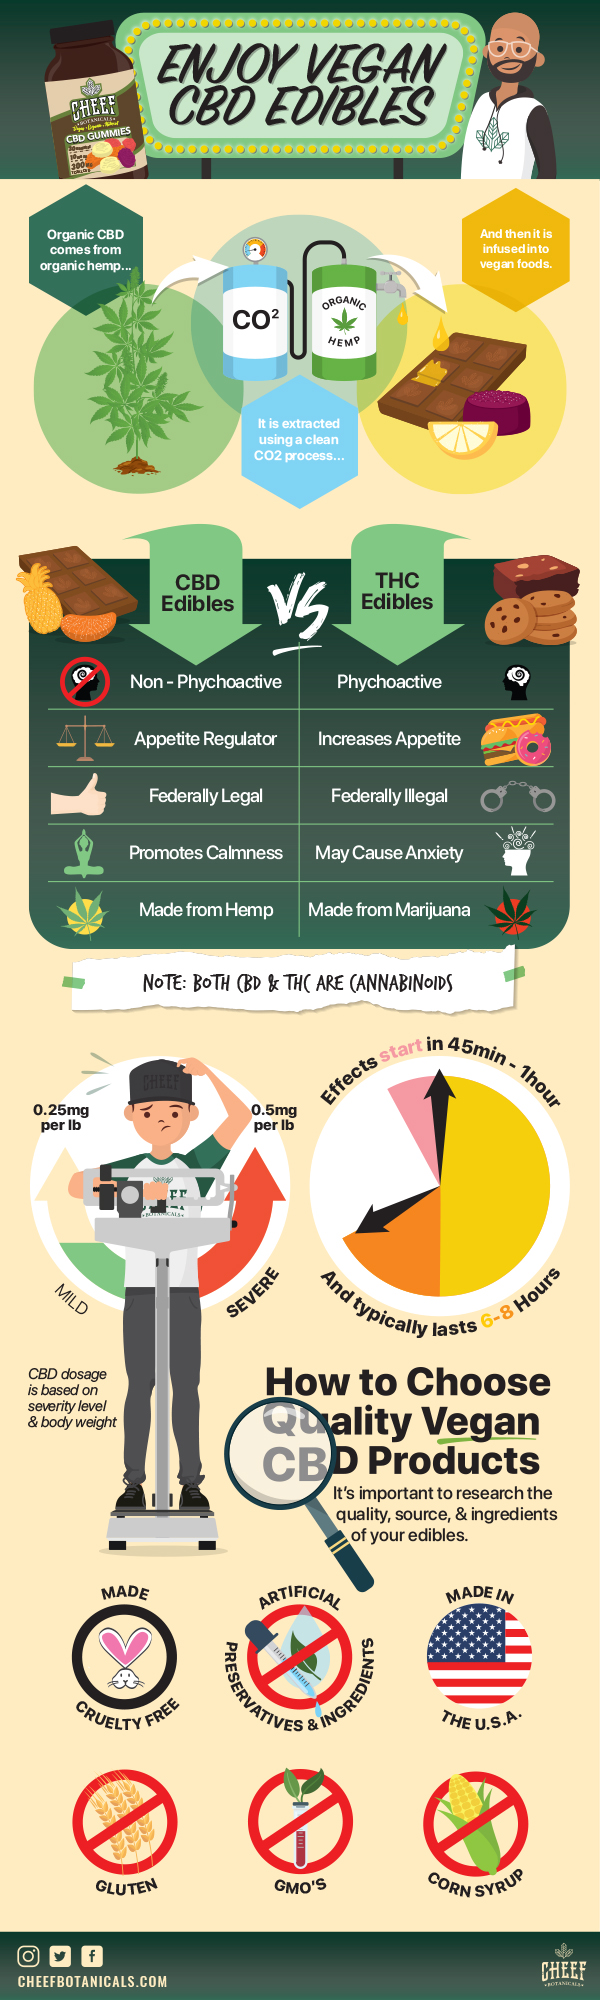 Enjoy vegan CBD edibles infographic